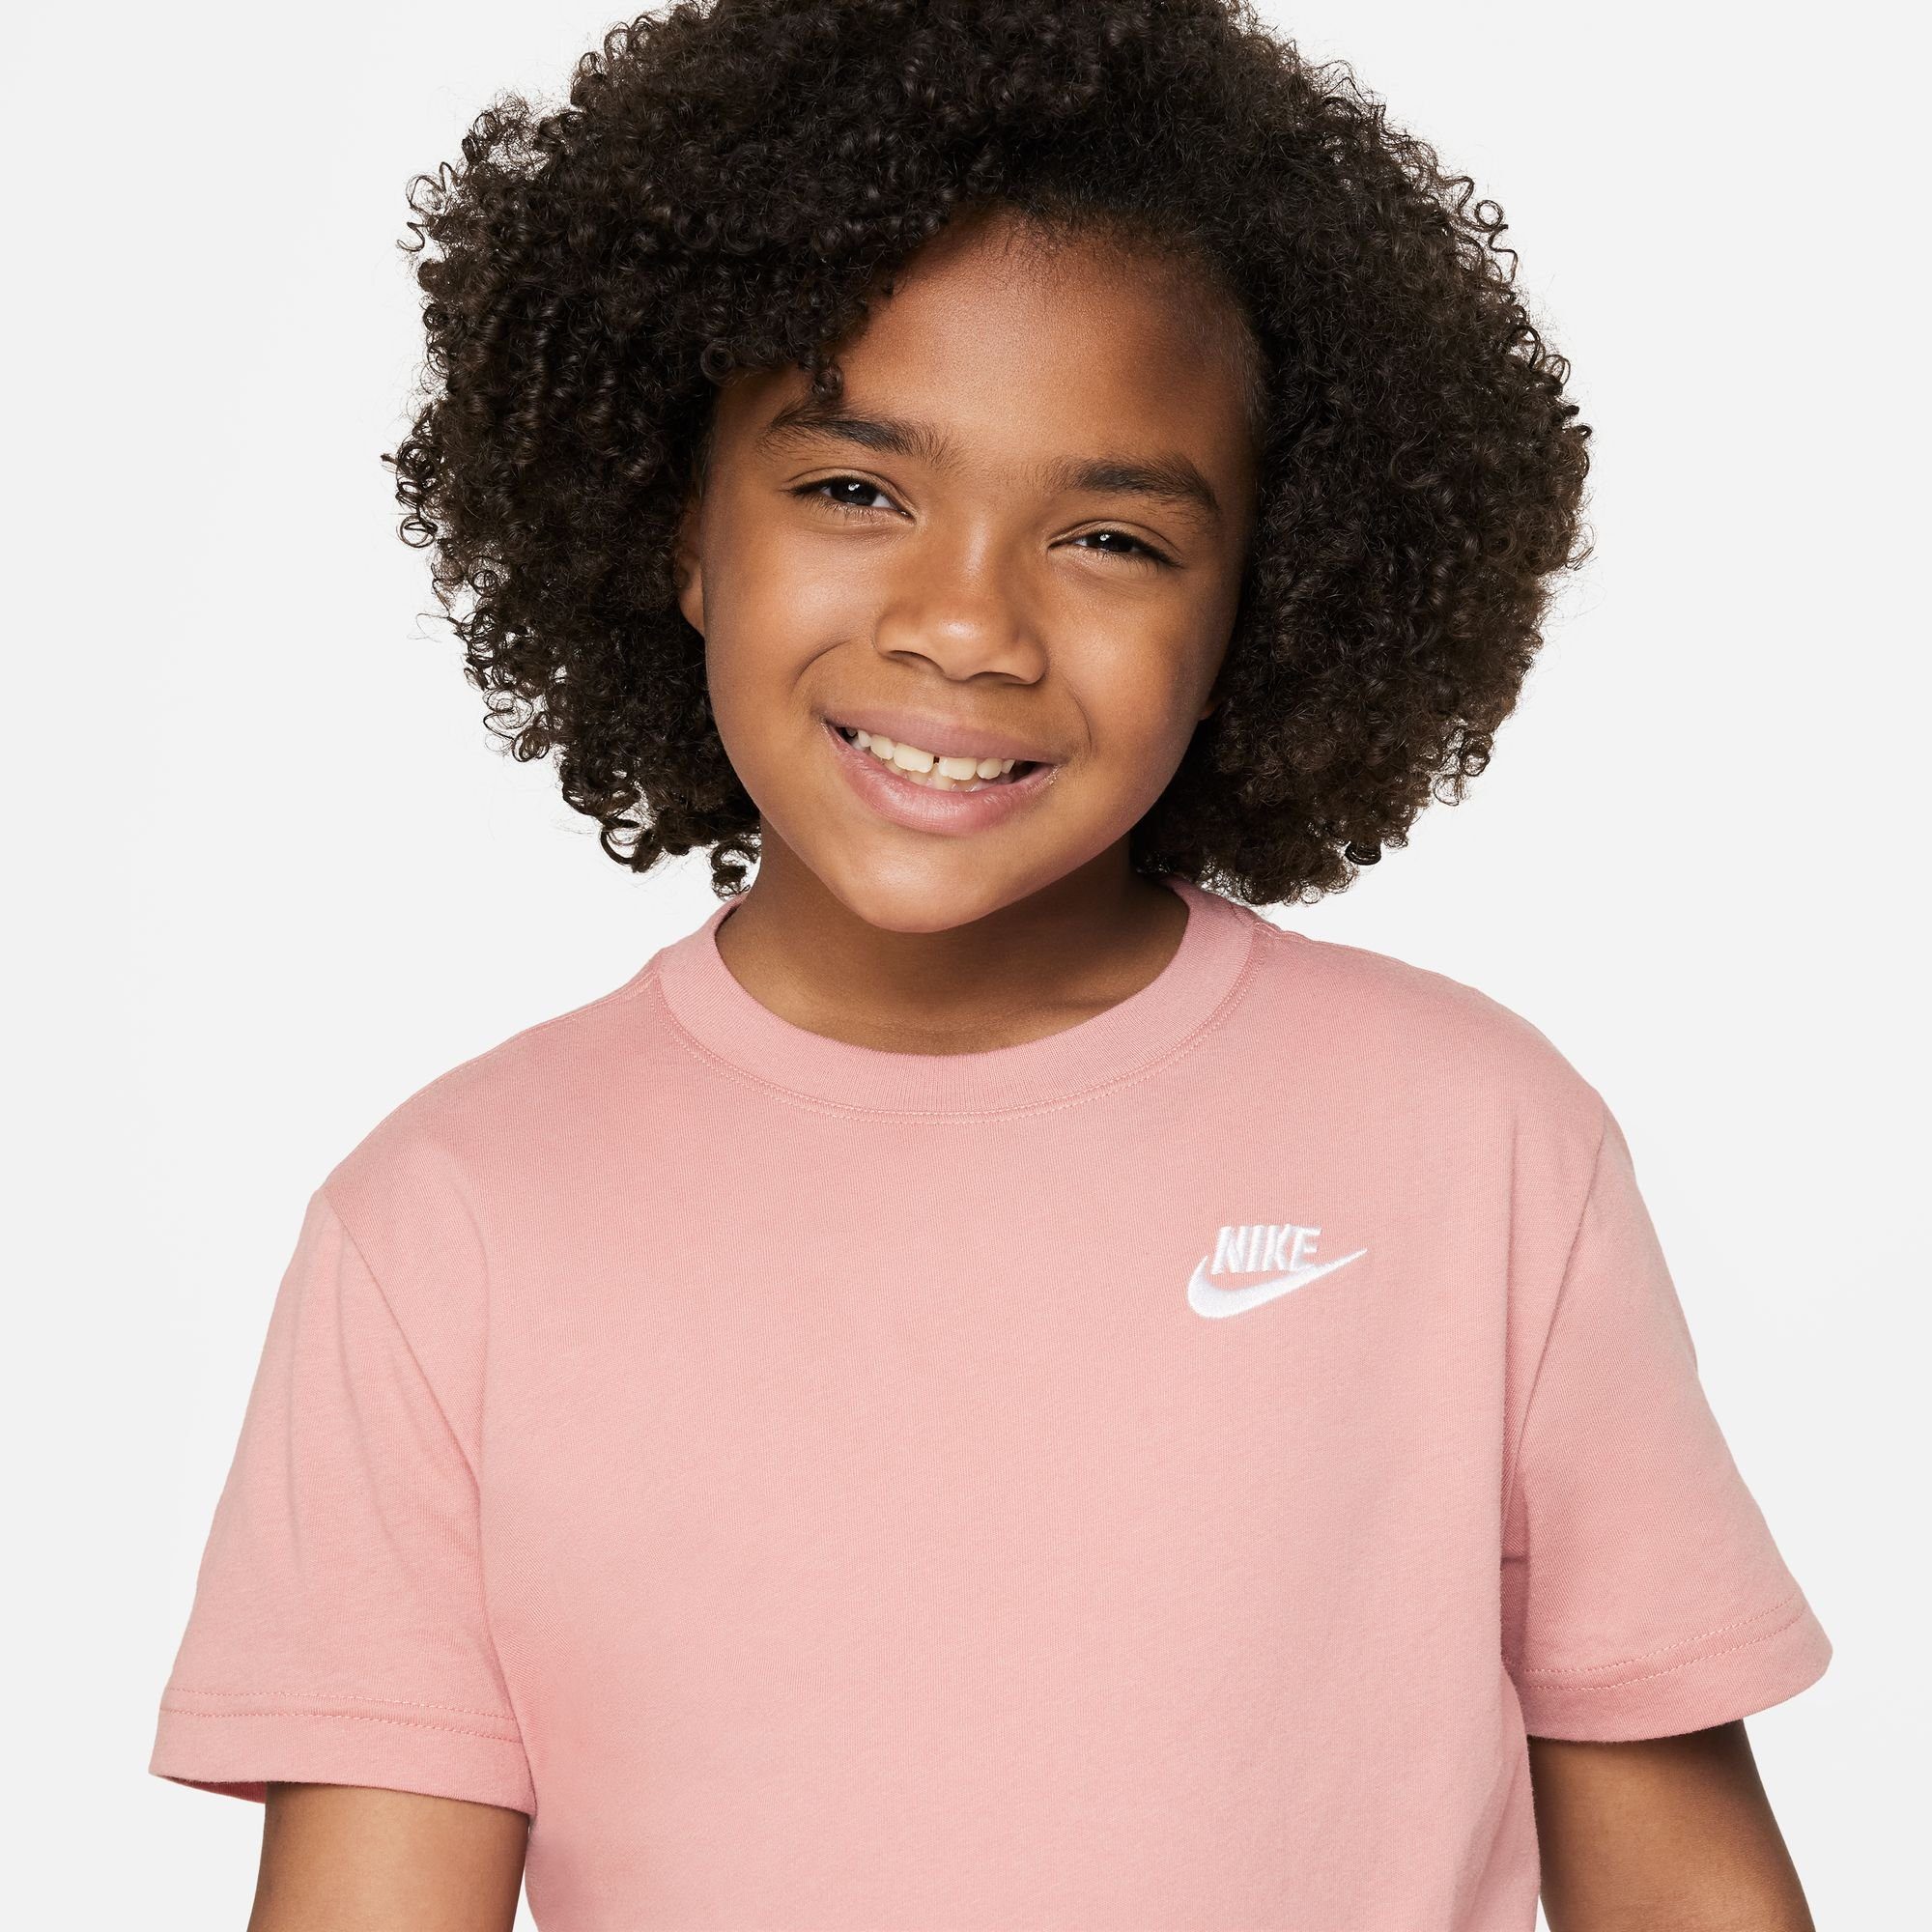 T-SHIRT Nike KIDS' Sportswear STARDUST RED T-Shirt (GIRLS) BIG